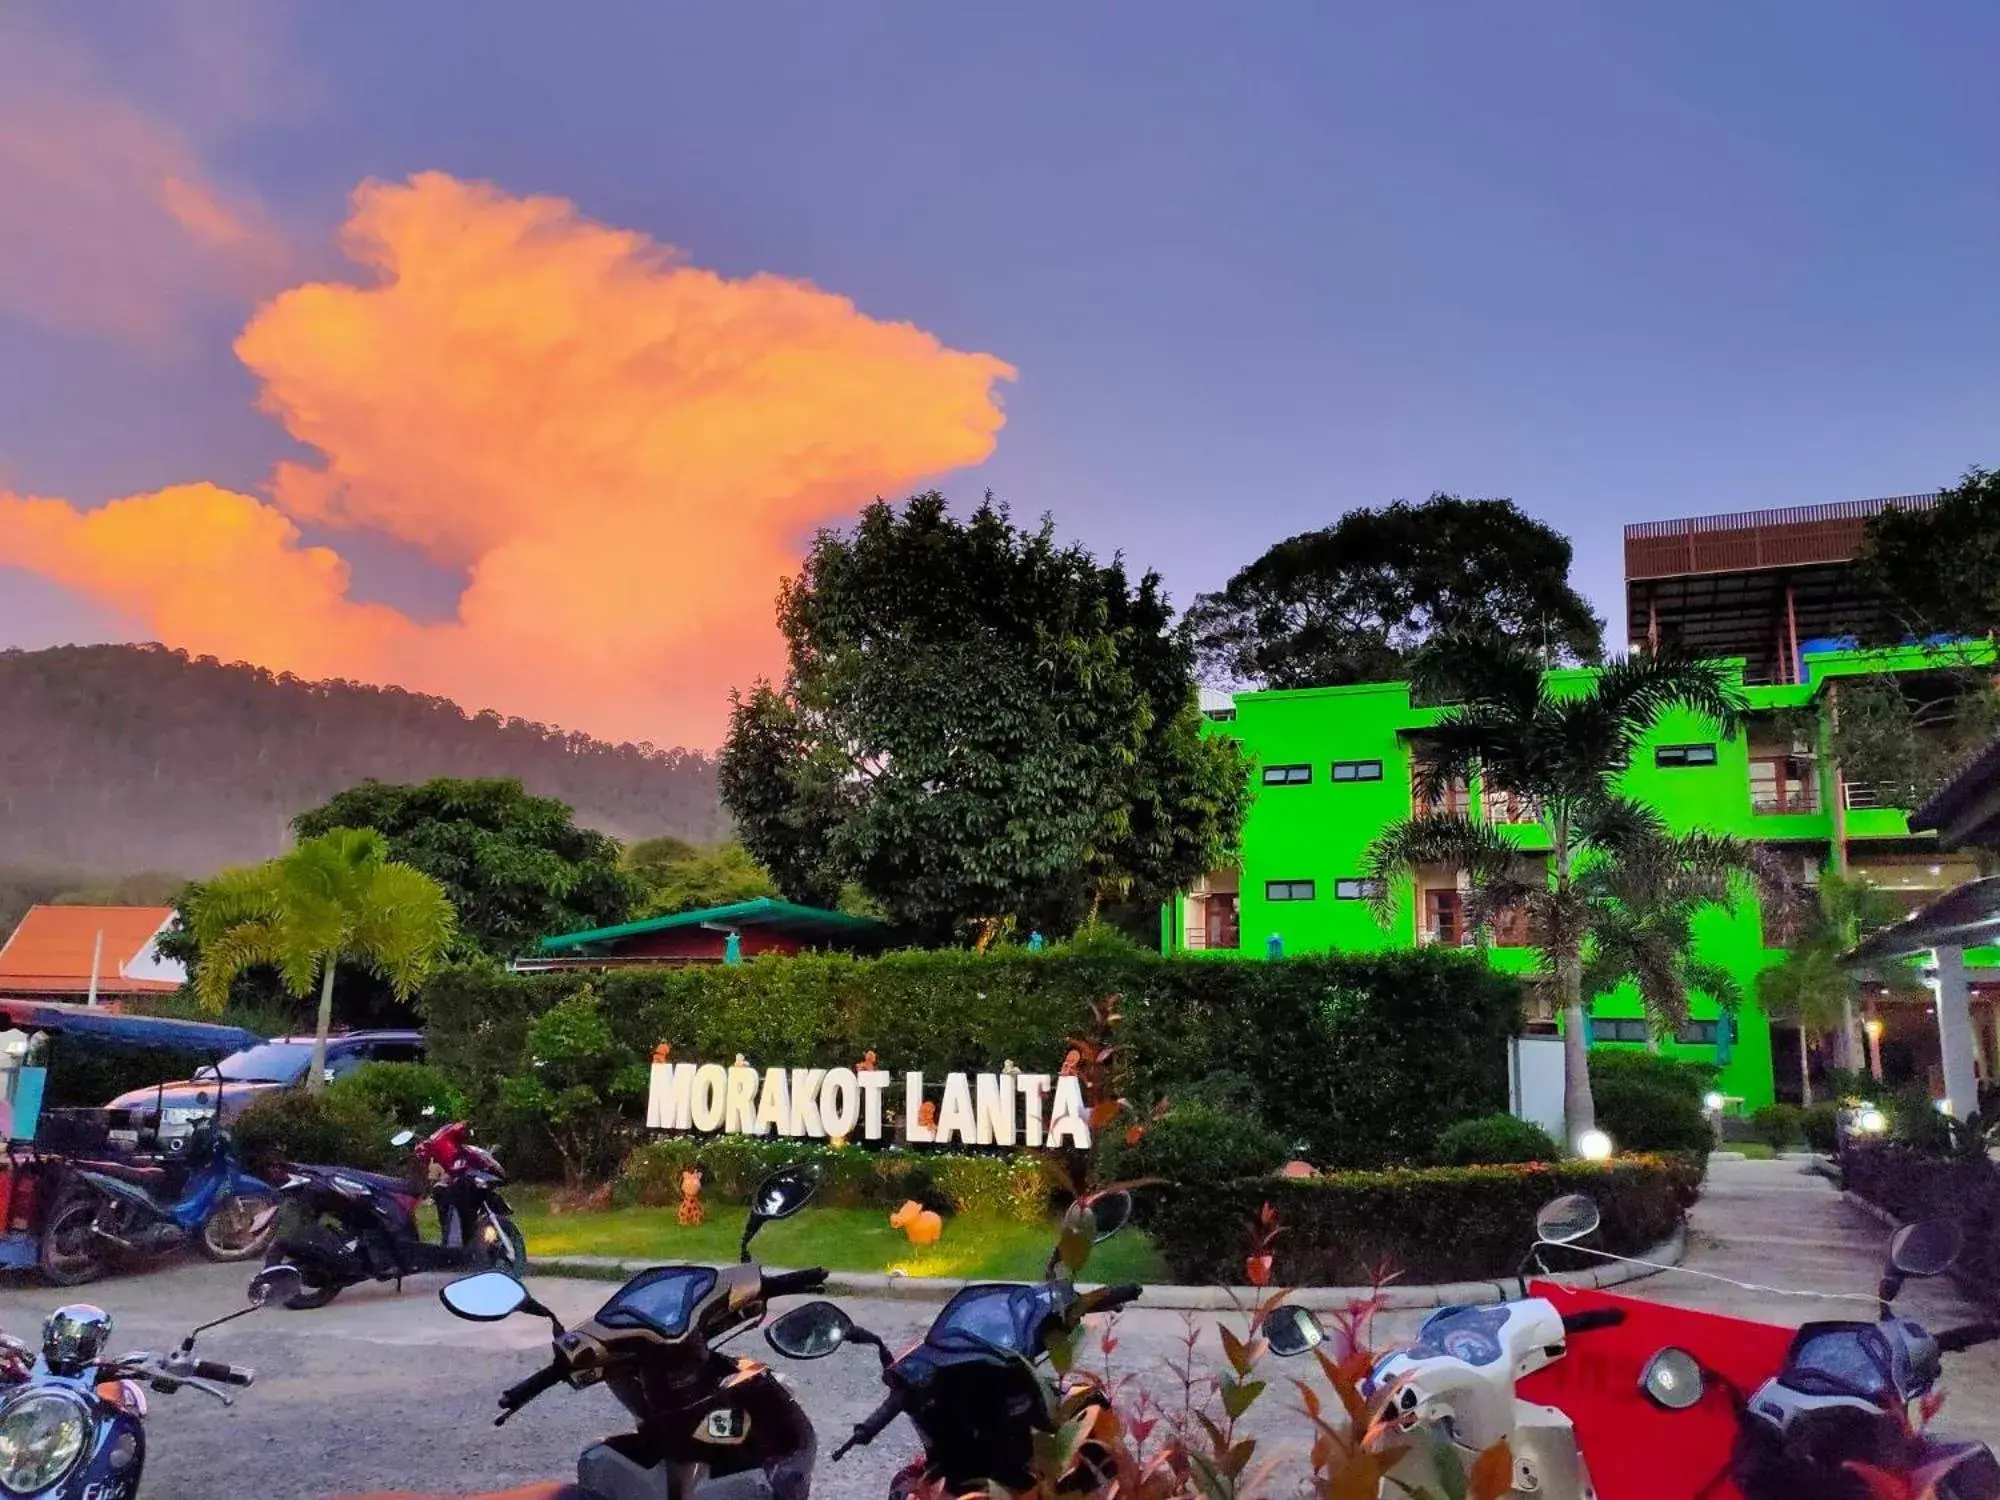 Morakot Lanta Resort